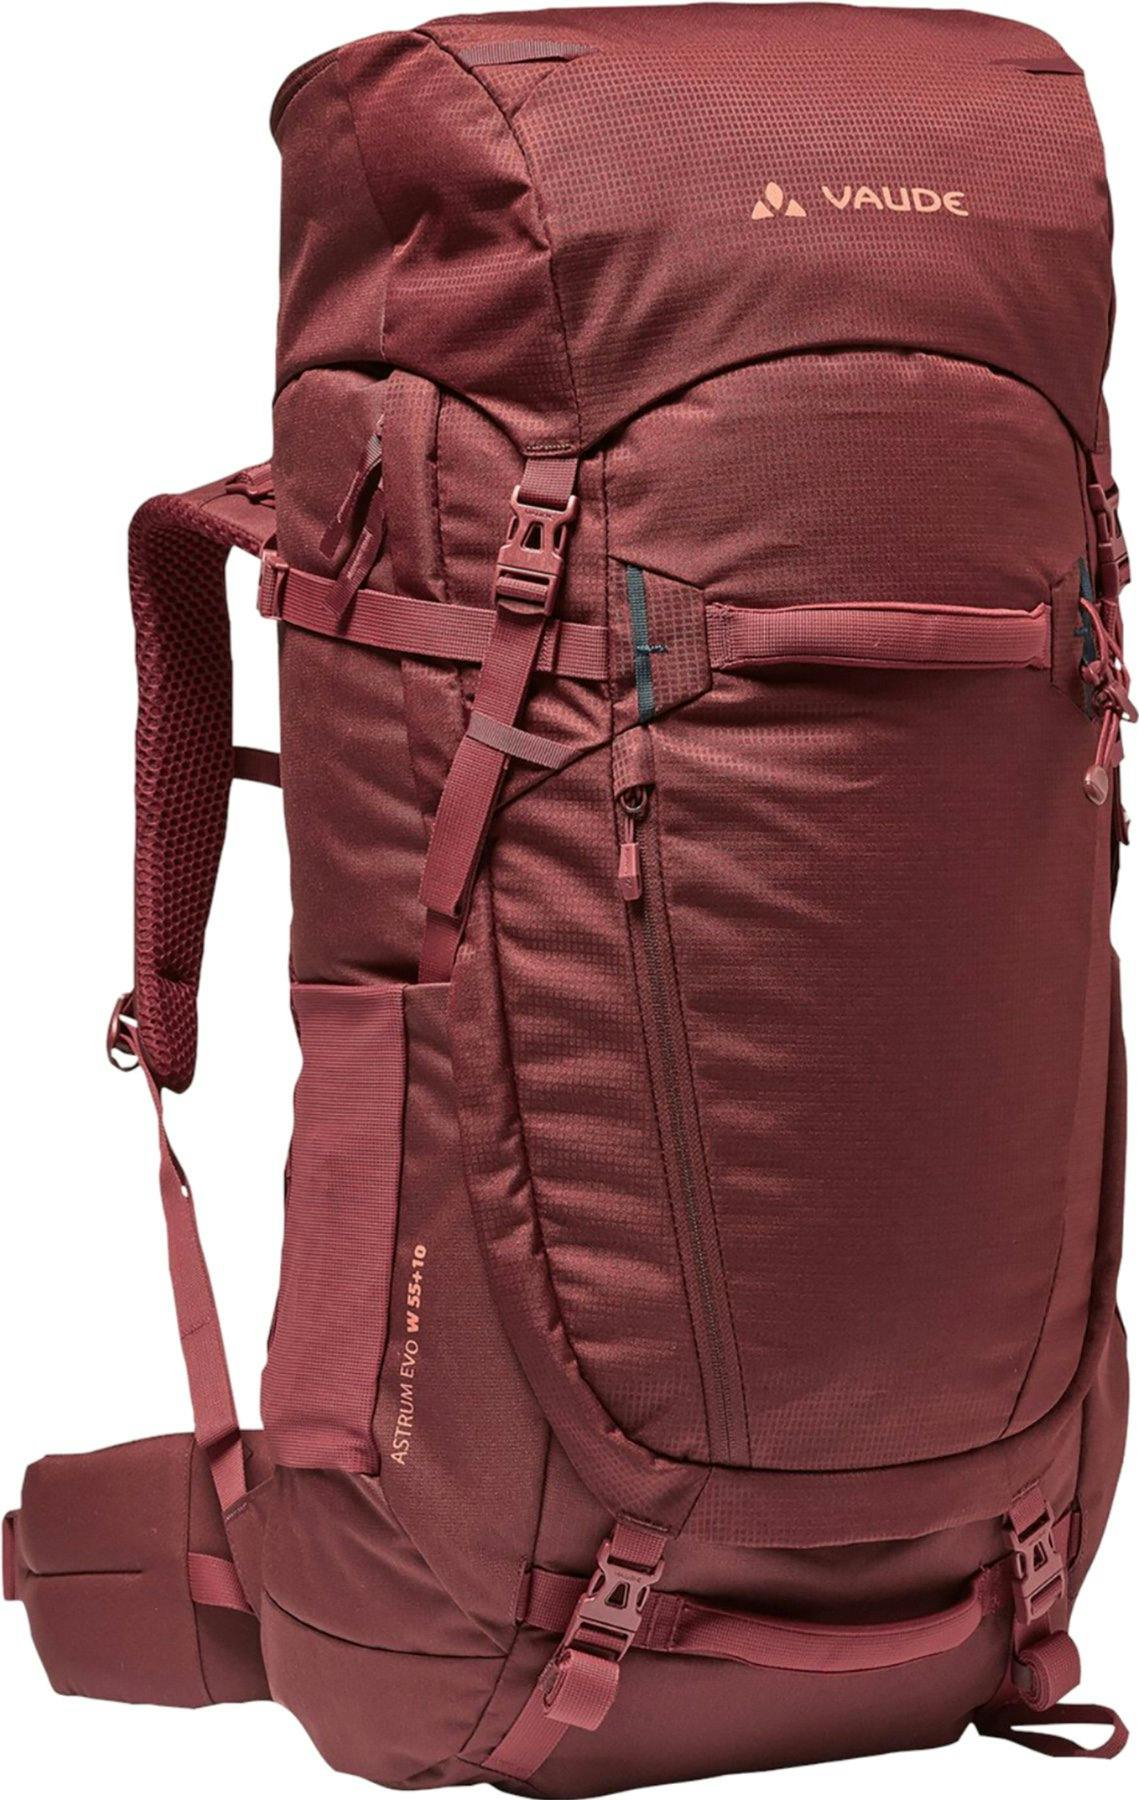 Product image for Astrum EVO Trekking Backpack 55+10L - Women's